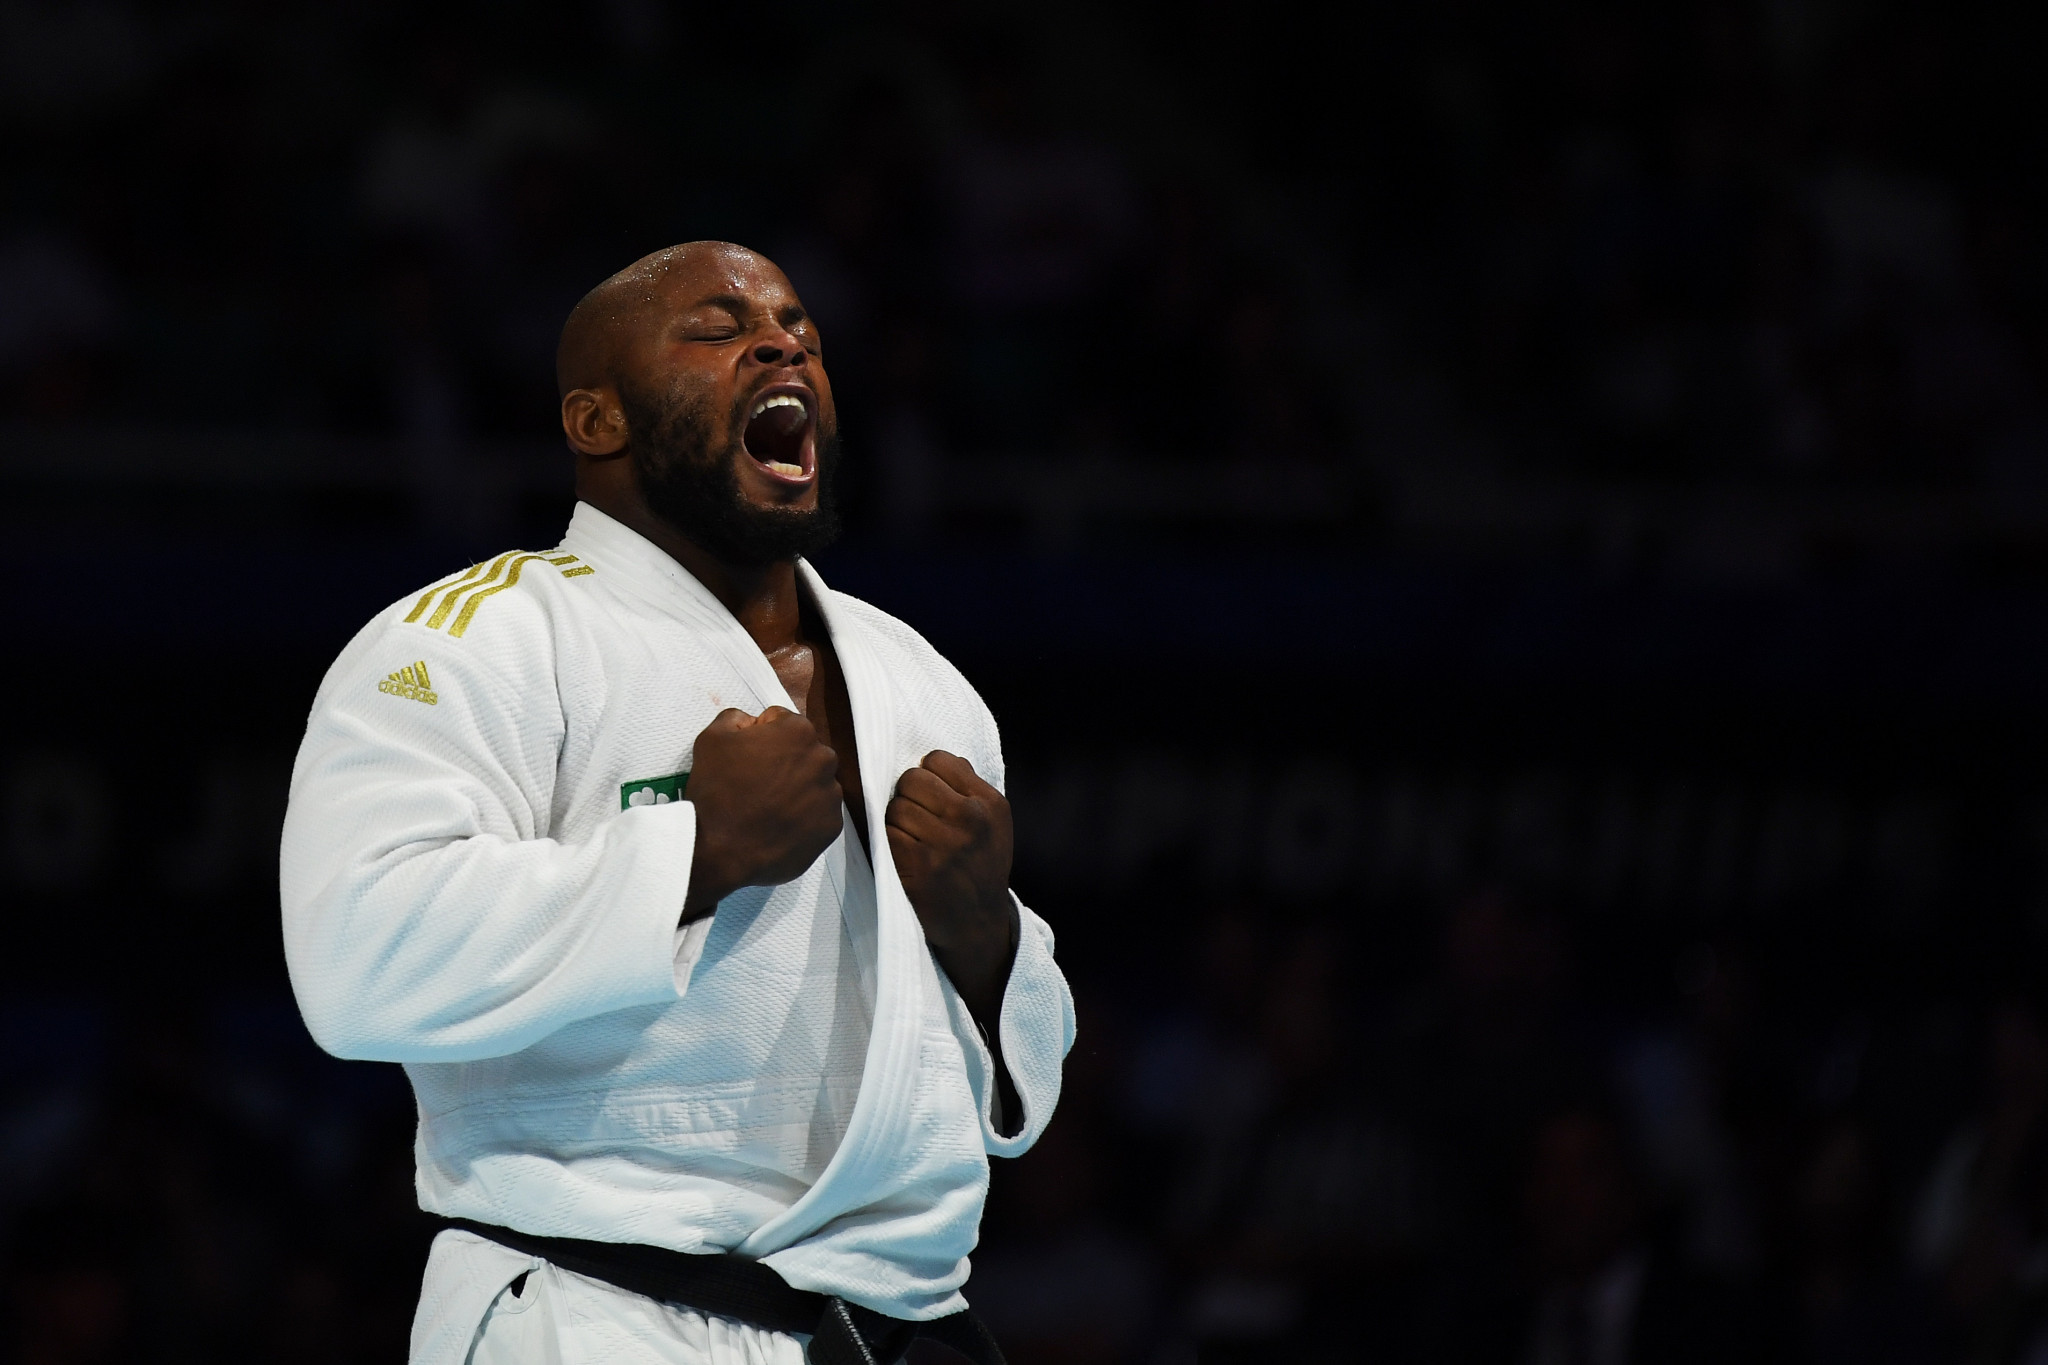 Portuguese world judo champion Fonseca tests positive for coronavirus